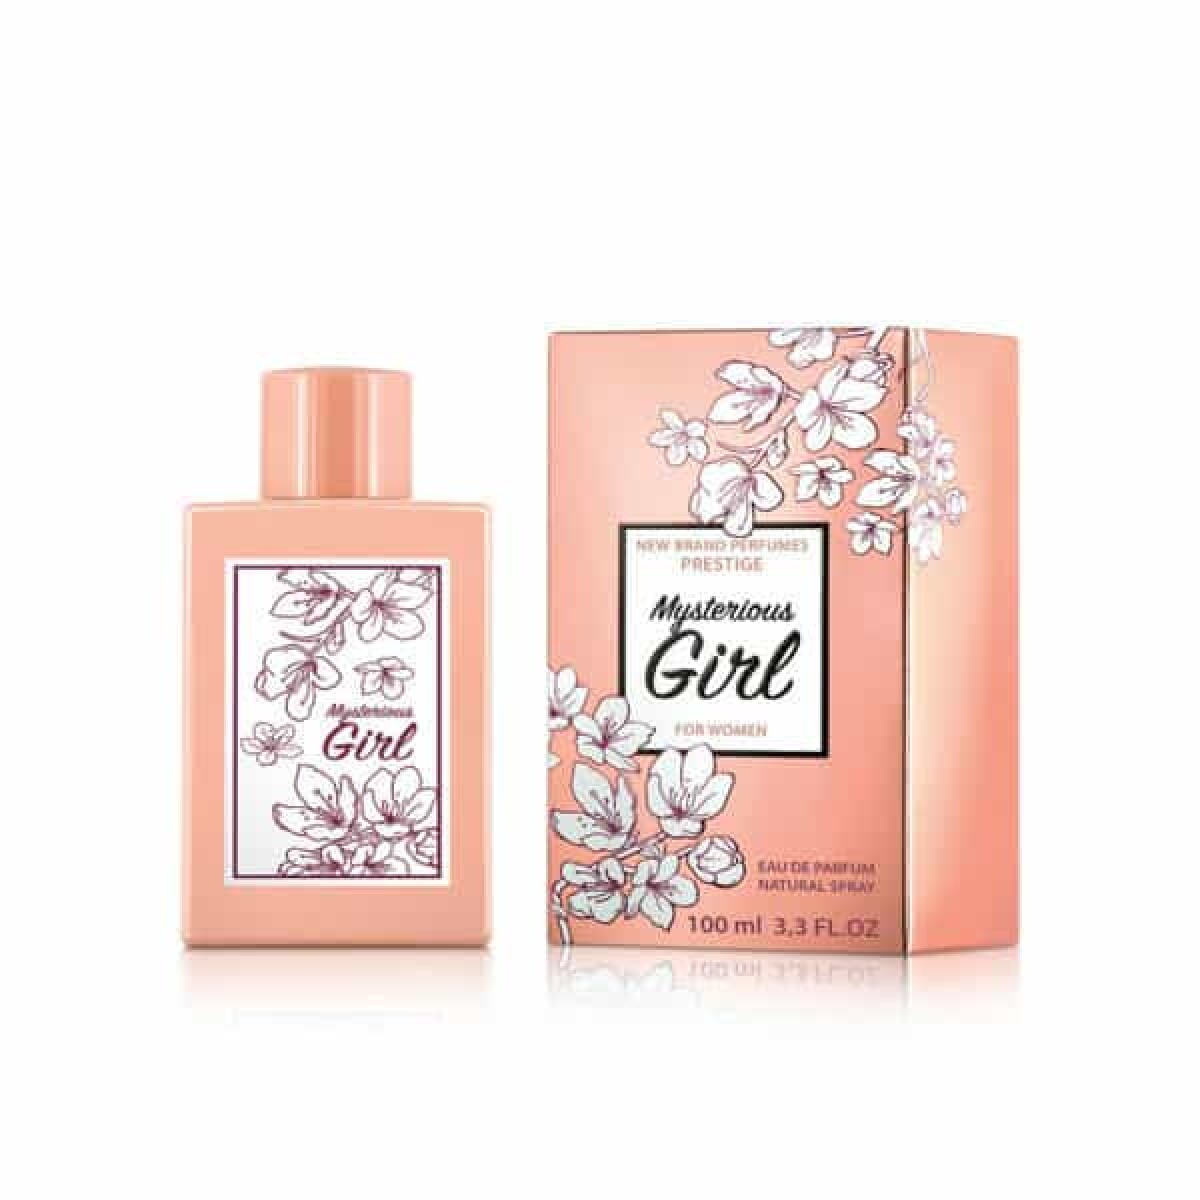 Perfume New Brand Mysterious Girl Edp 100 ml 